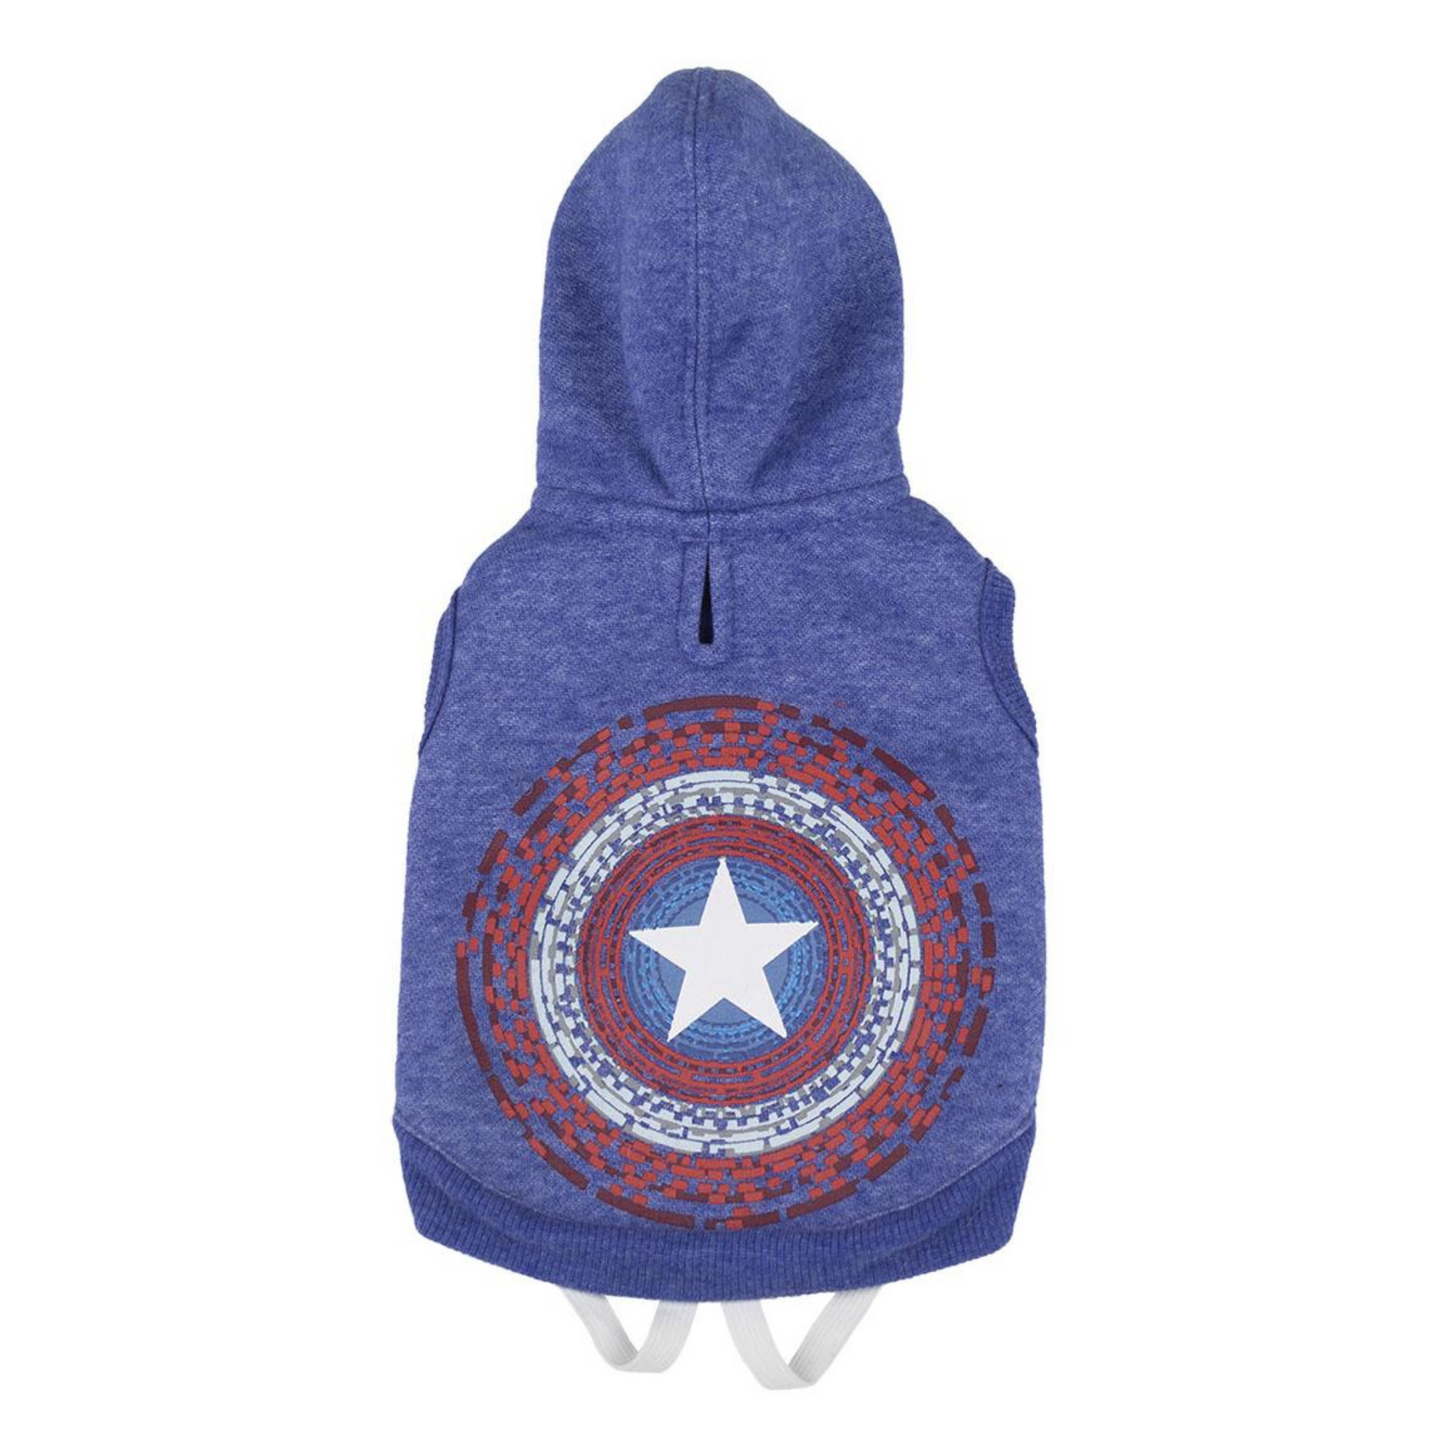 Captain America Dog Hoody Sweatshirt